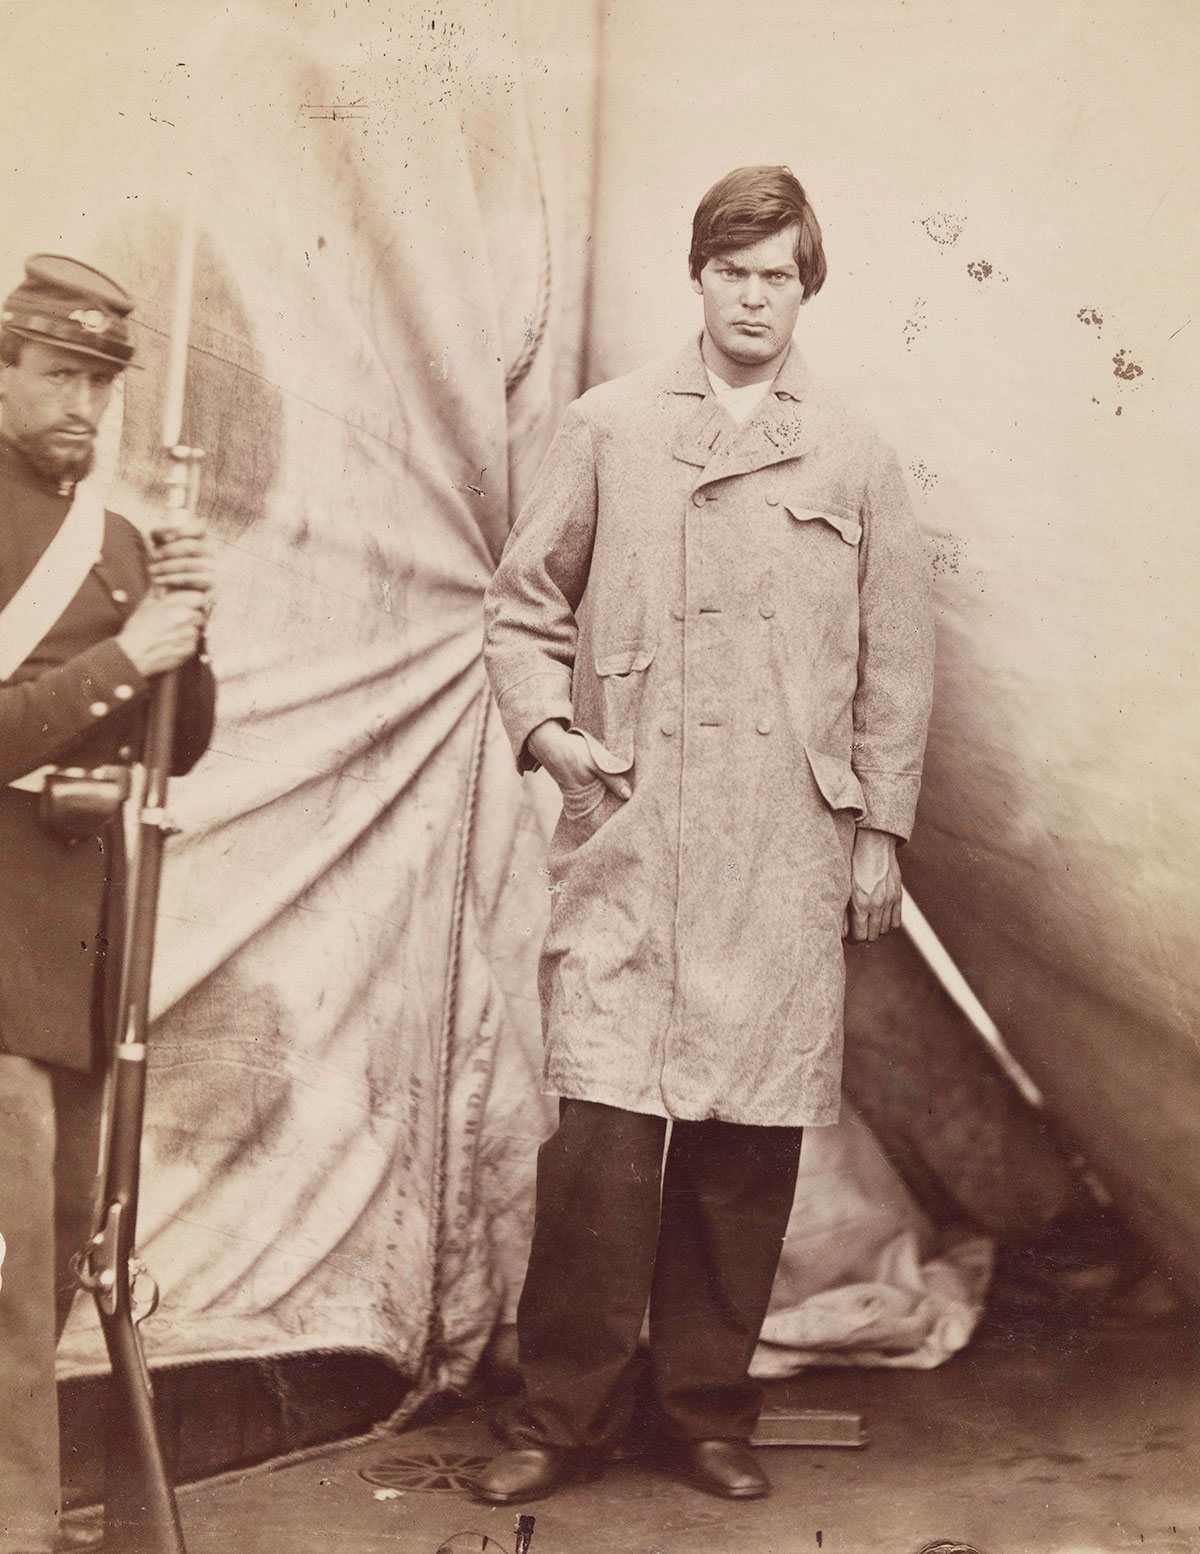 Portrait of Lewis Powell by Alexander Gardner, April 27, 1865